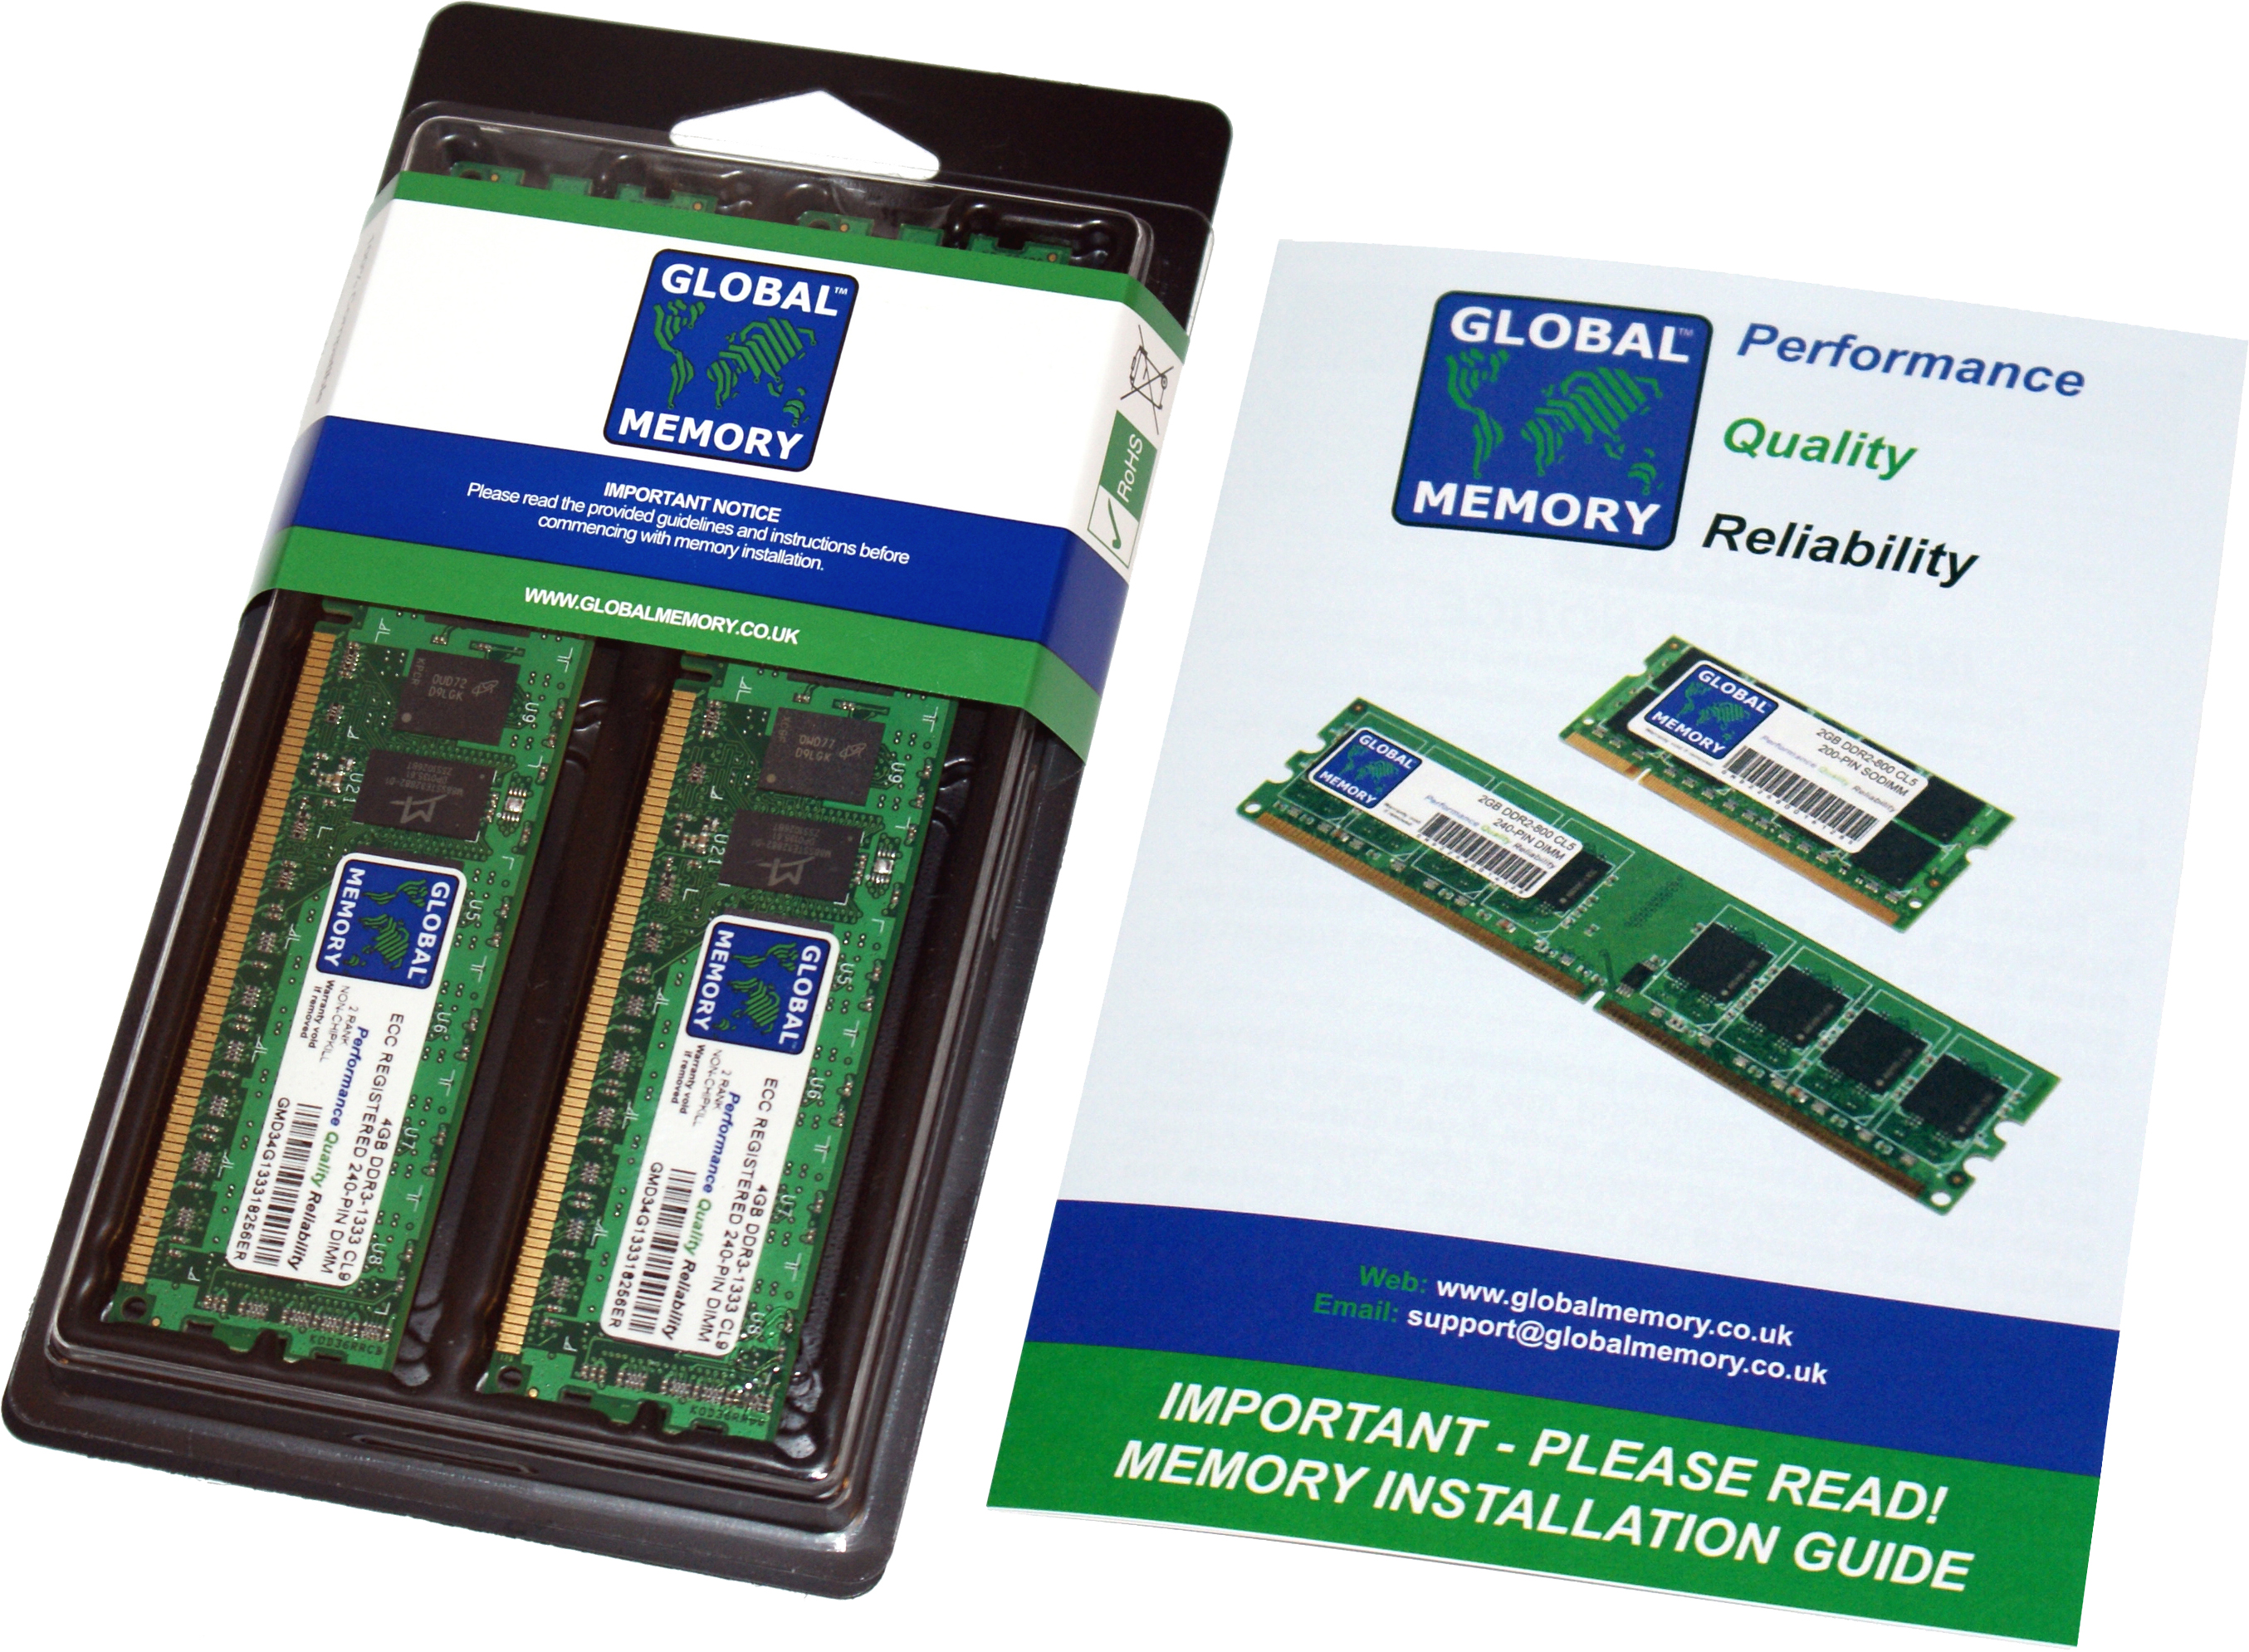 32GB (4 x 8GB) DDR4 3200MHz PC4-25600 288-PIN ECC REGISTERED DIMM (RDIMM) MEMORY RAM KIT FOR LENOVO SERVERS/WORKSTATIONS (4 RANK KIT CHIPKILL)